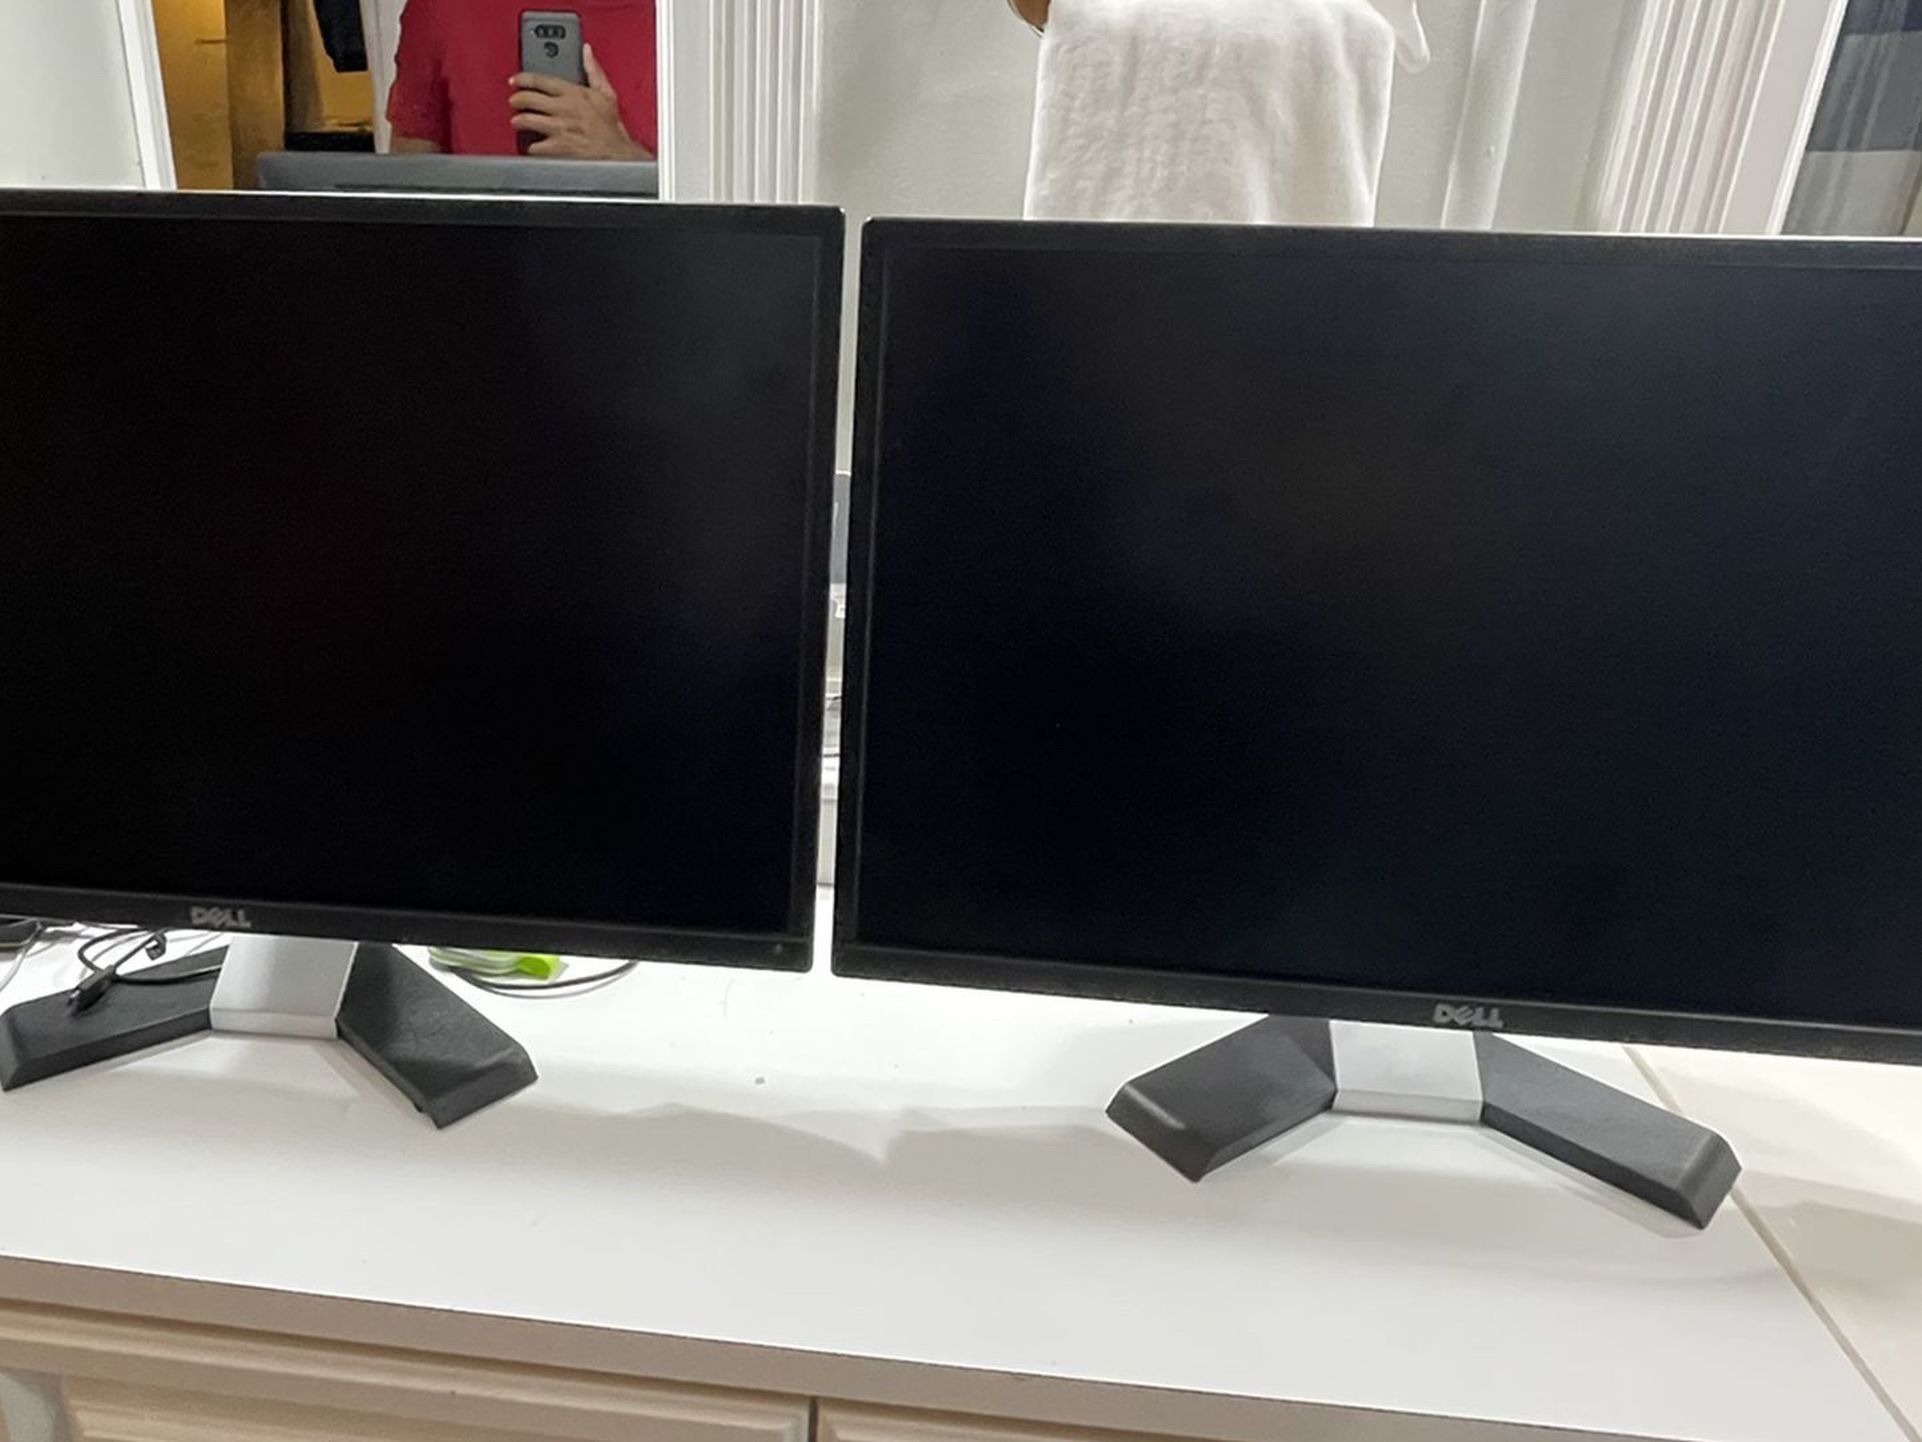 2 Dell Monitors